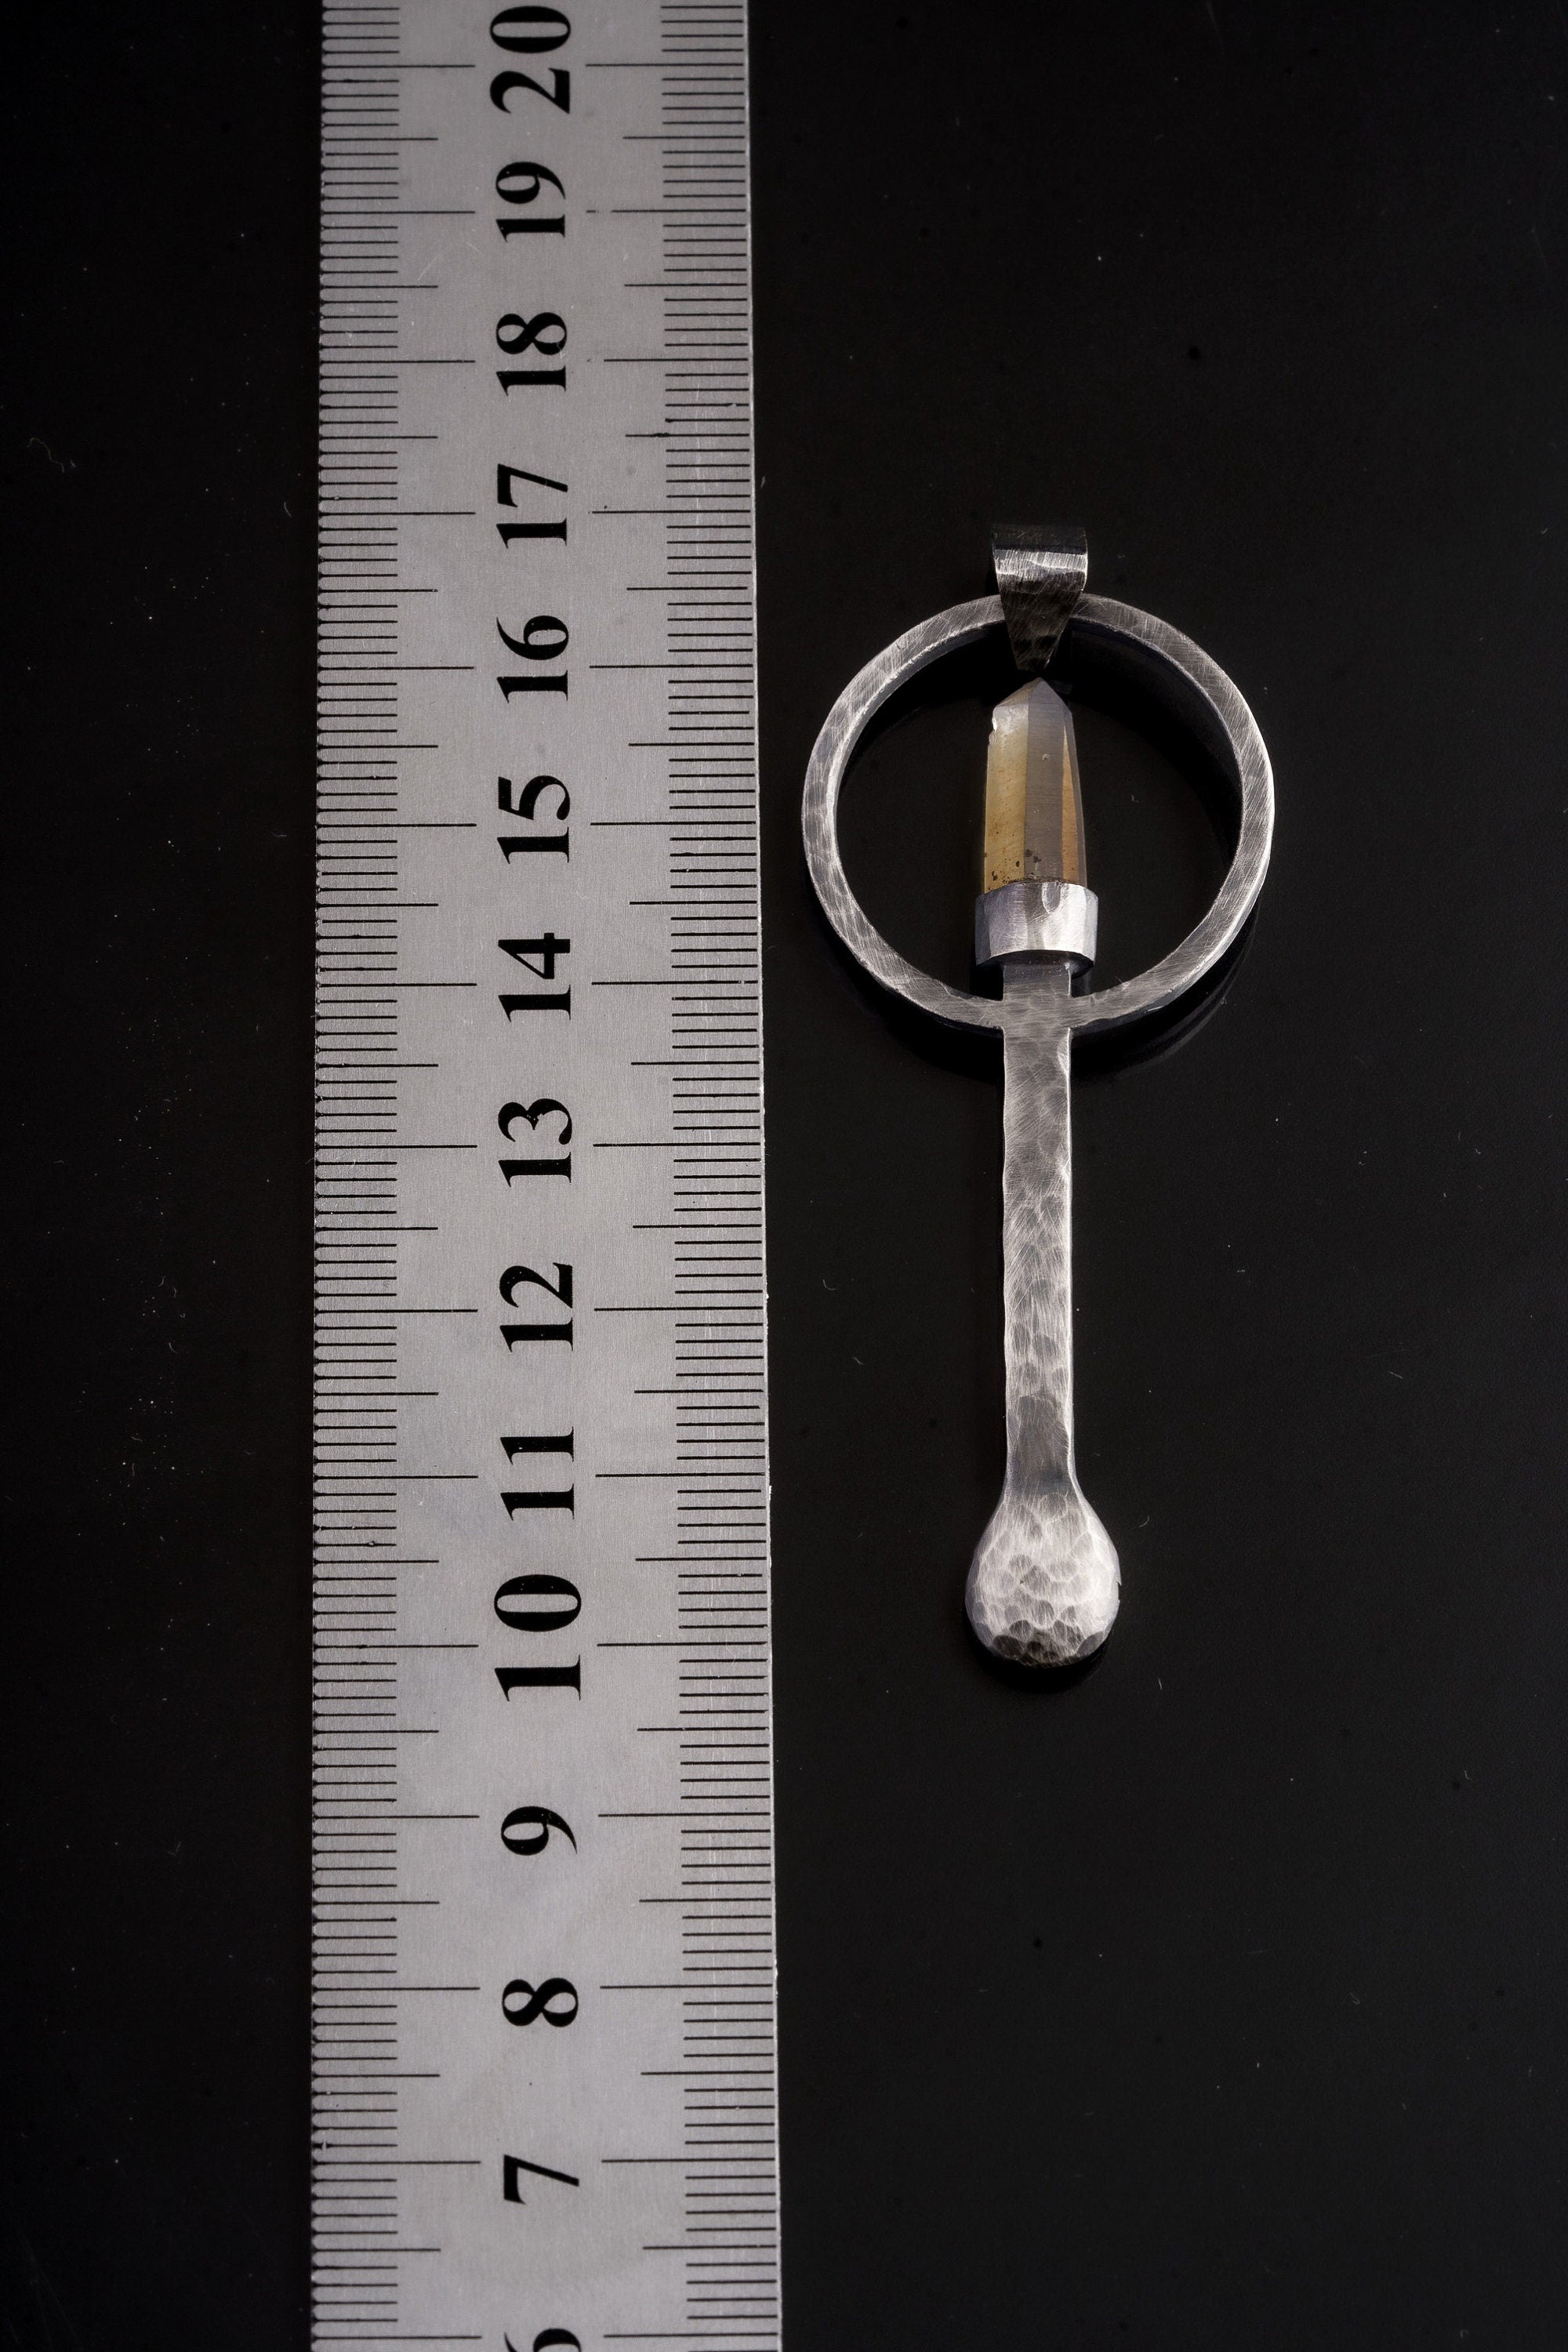 Australian Torrington Citrine Point - Spice / Ceremonial Spoon - 925 Cast Silver - Oxidised Hammer Textured - Crystal Pendant Necklace